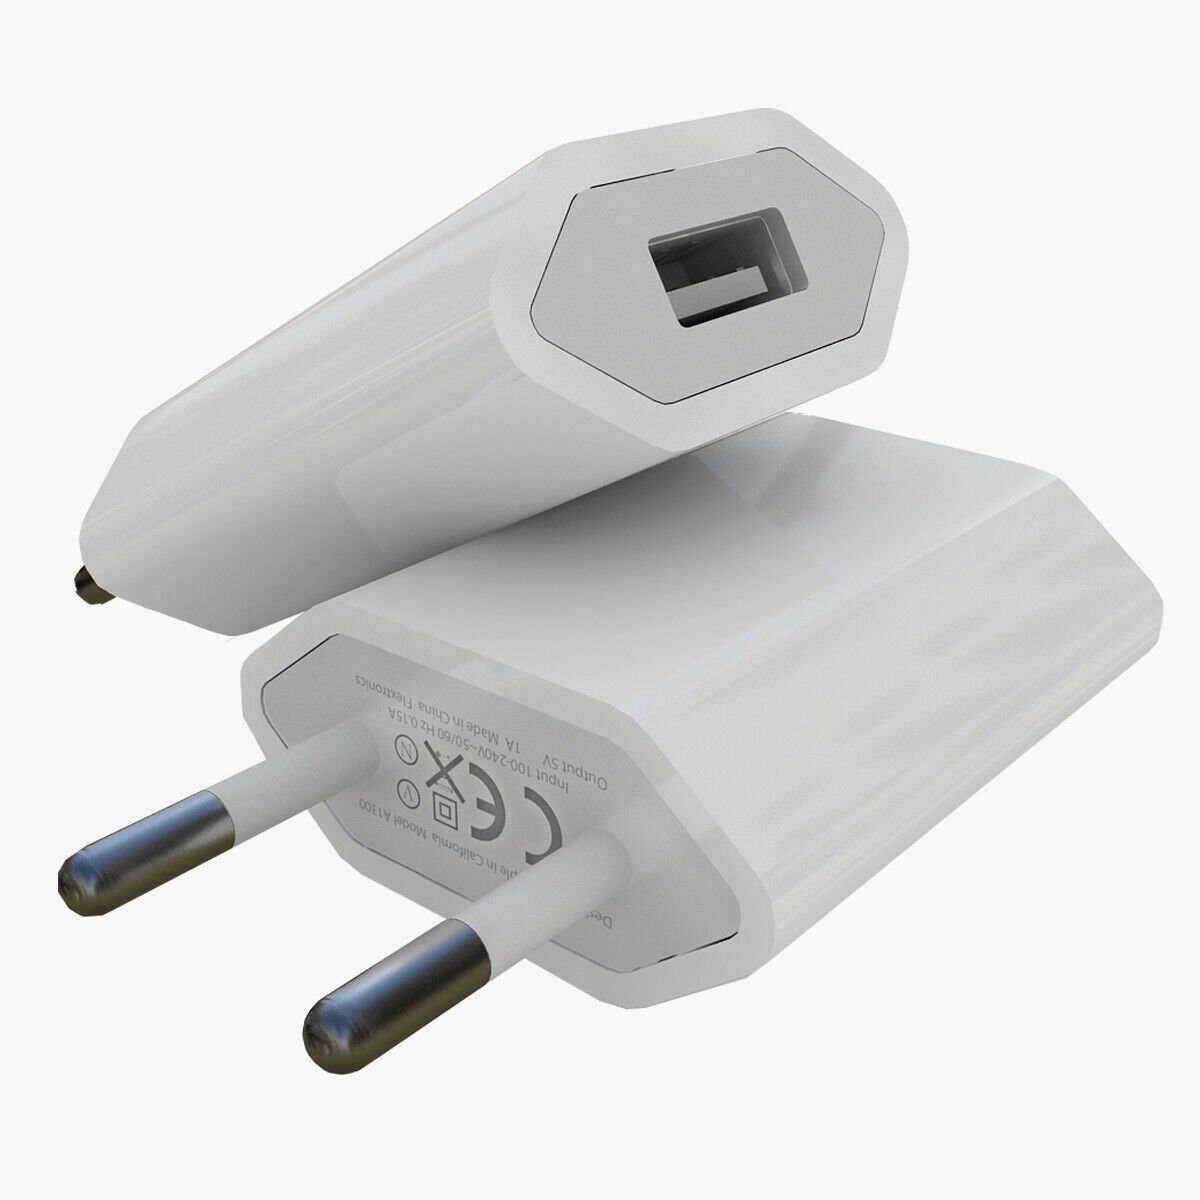 Cradys 5W USB Power Adapter Netzteil Stromadapter